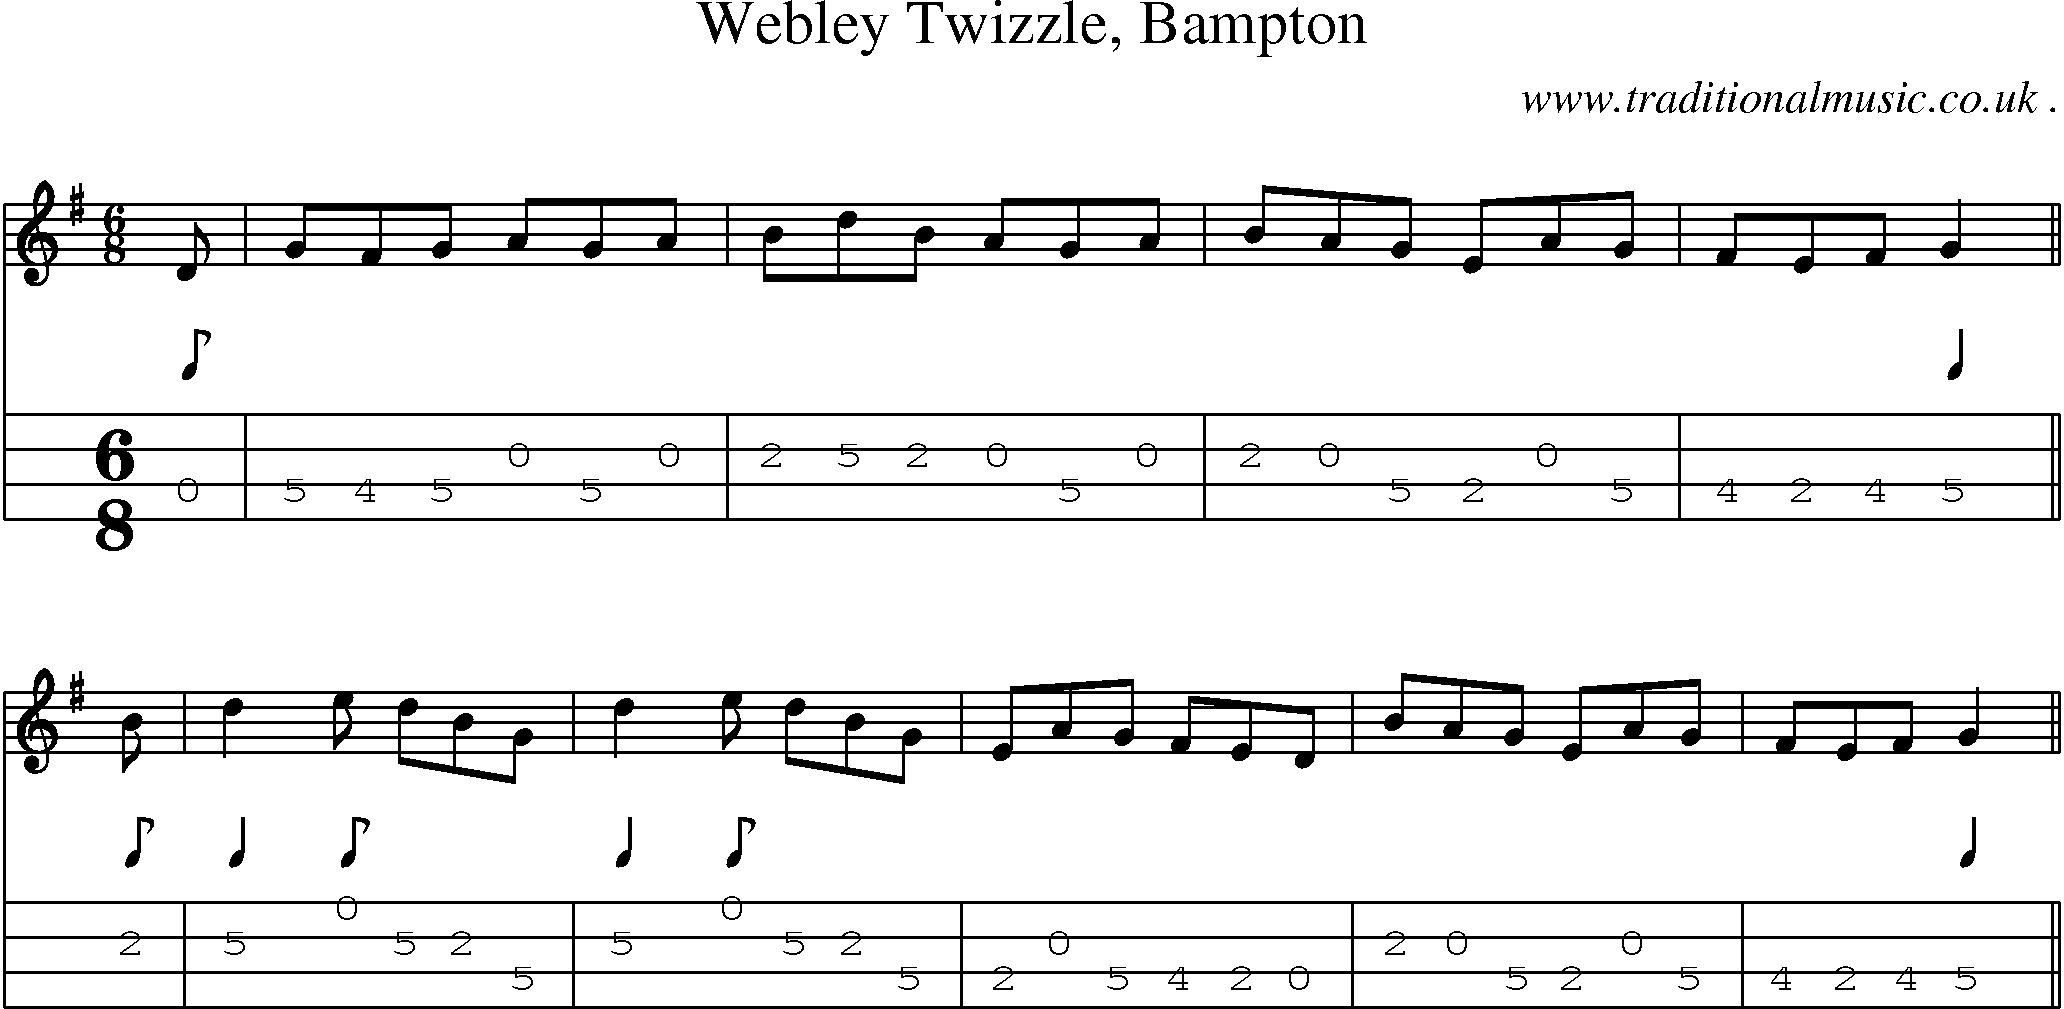 Sheet-Music and Mandolin Tabs for Webley Twizzle Bampton